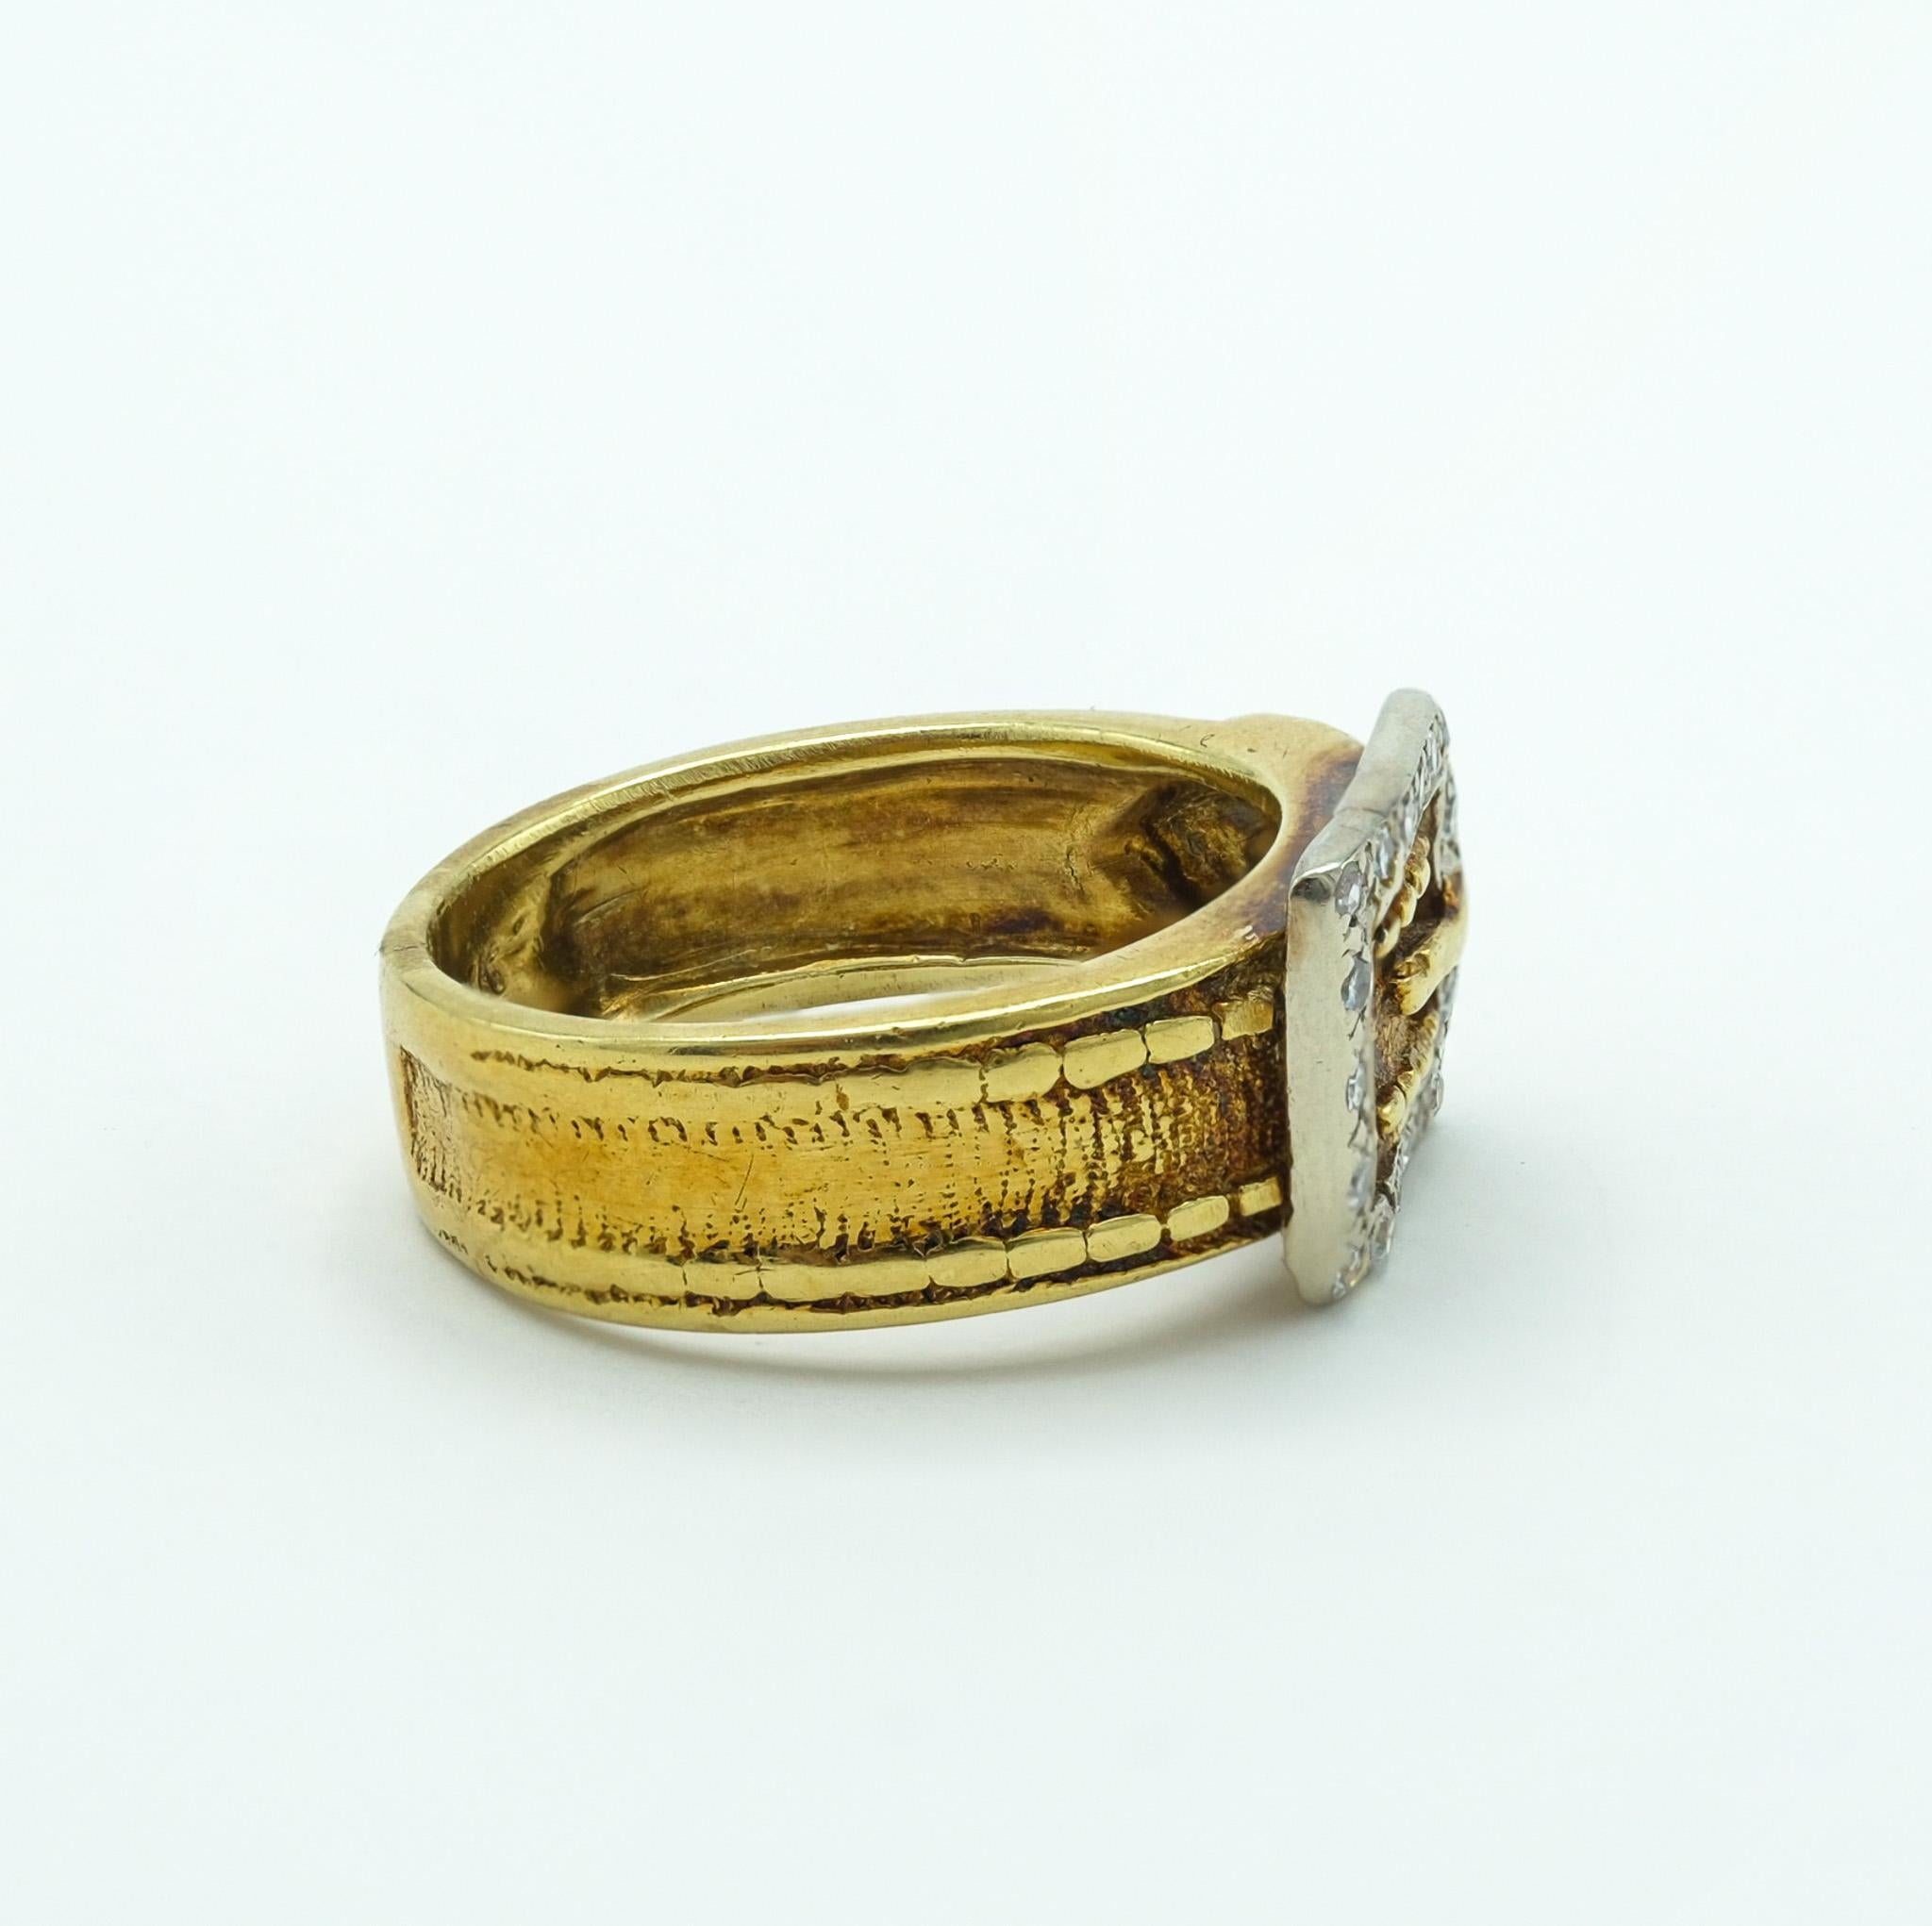 vintage gold buckle ring